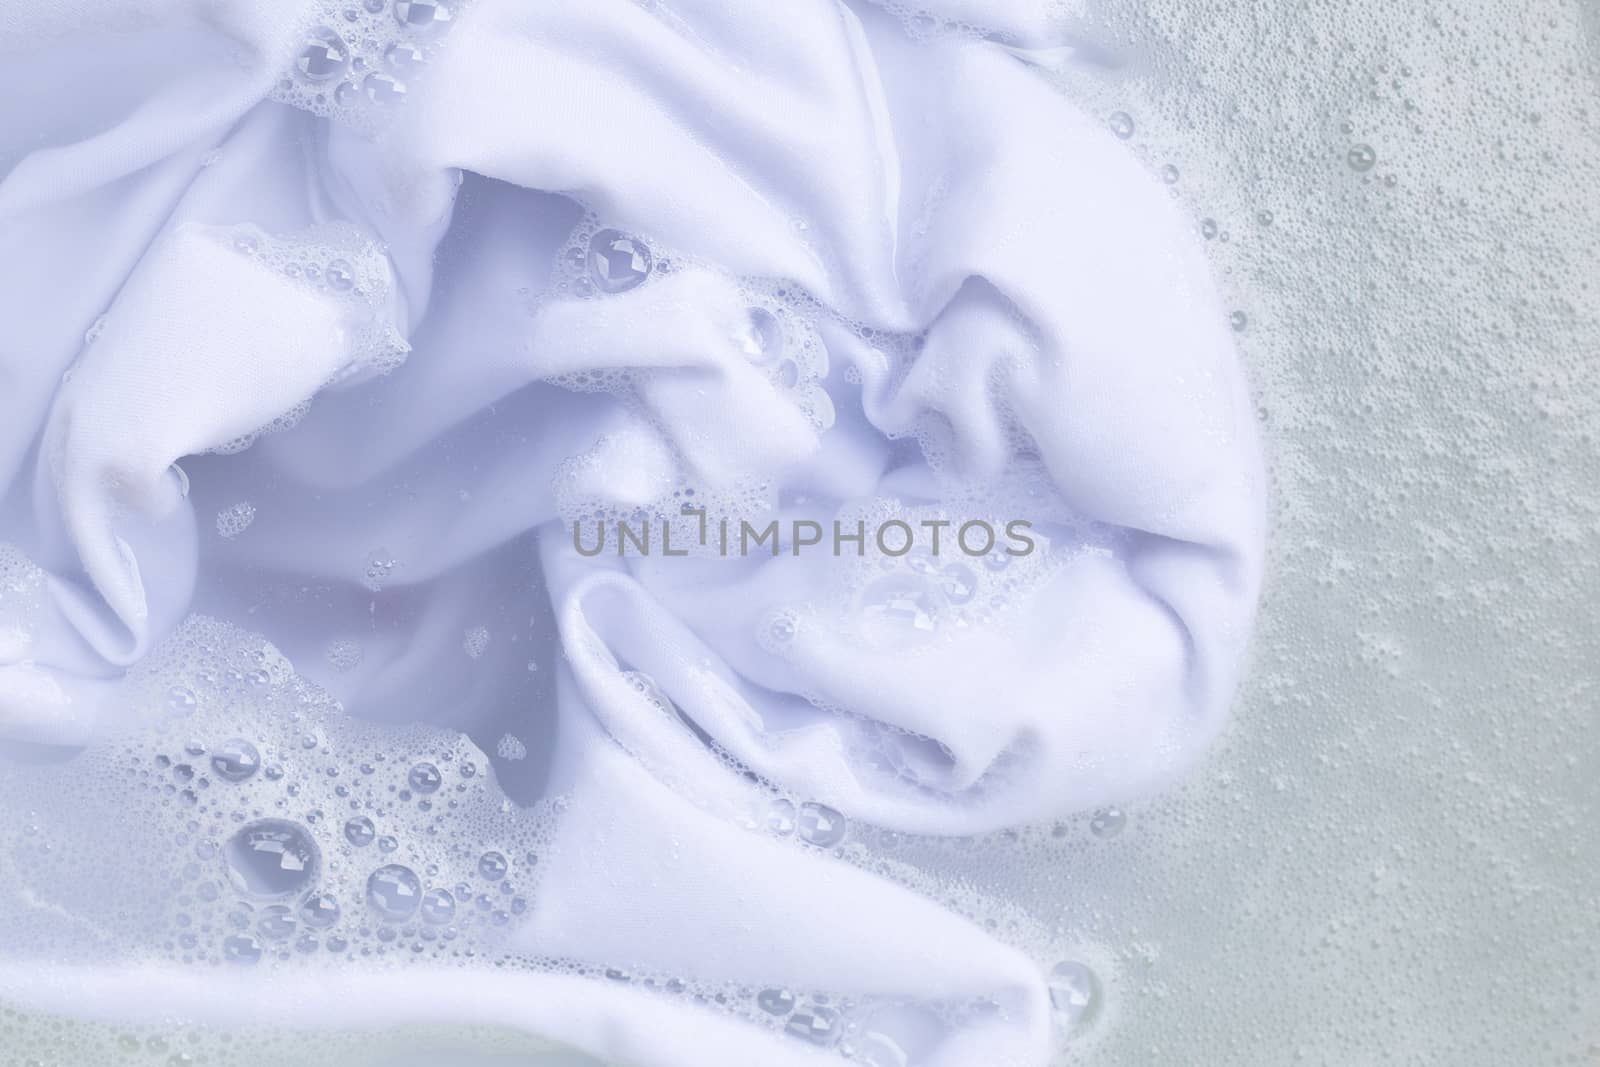 Soak a cloth before washing, white cloth. Top view